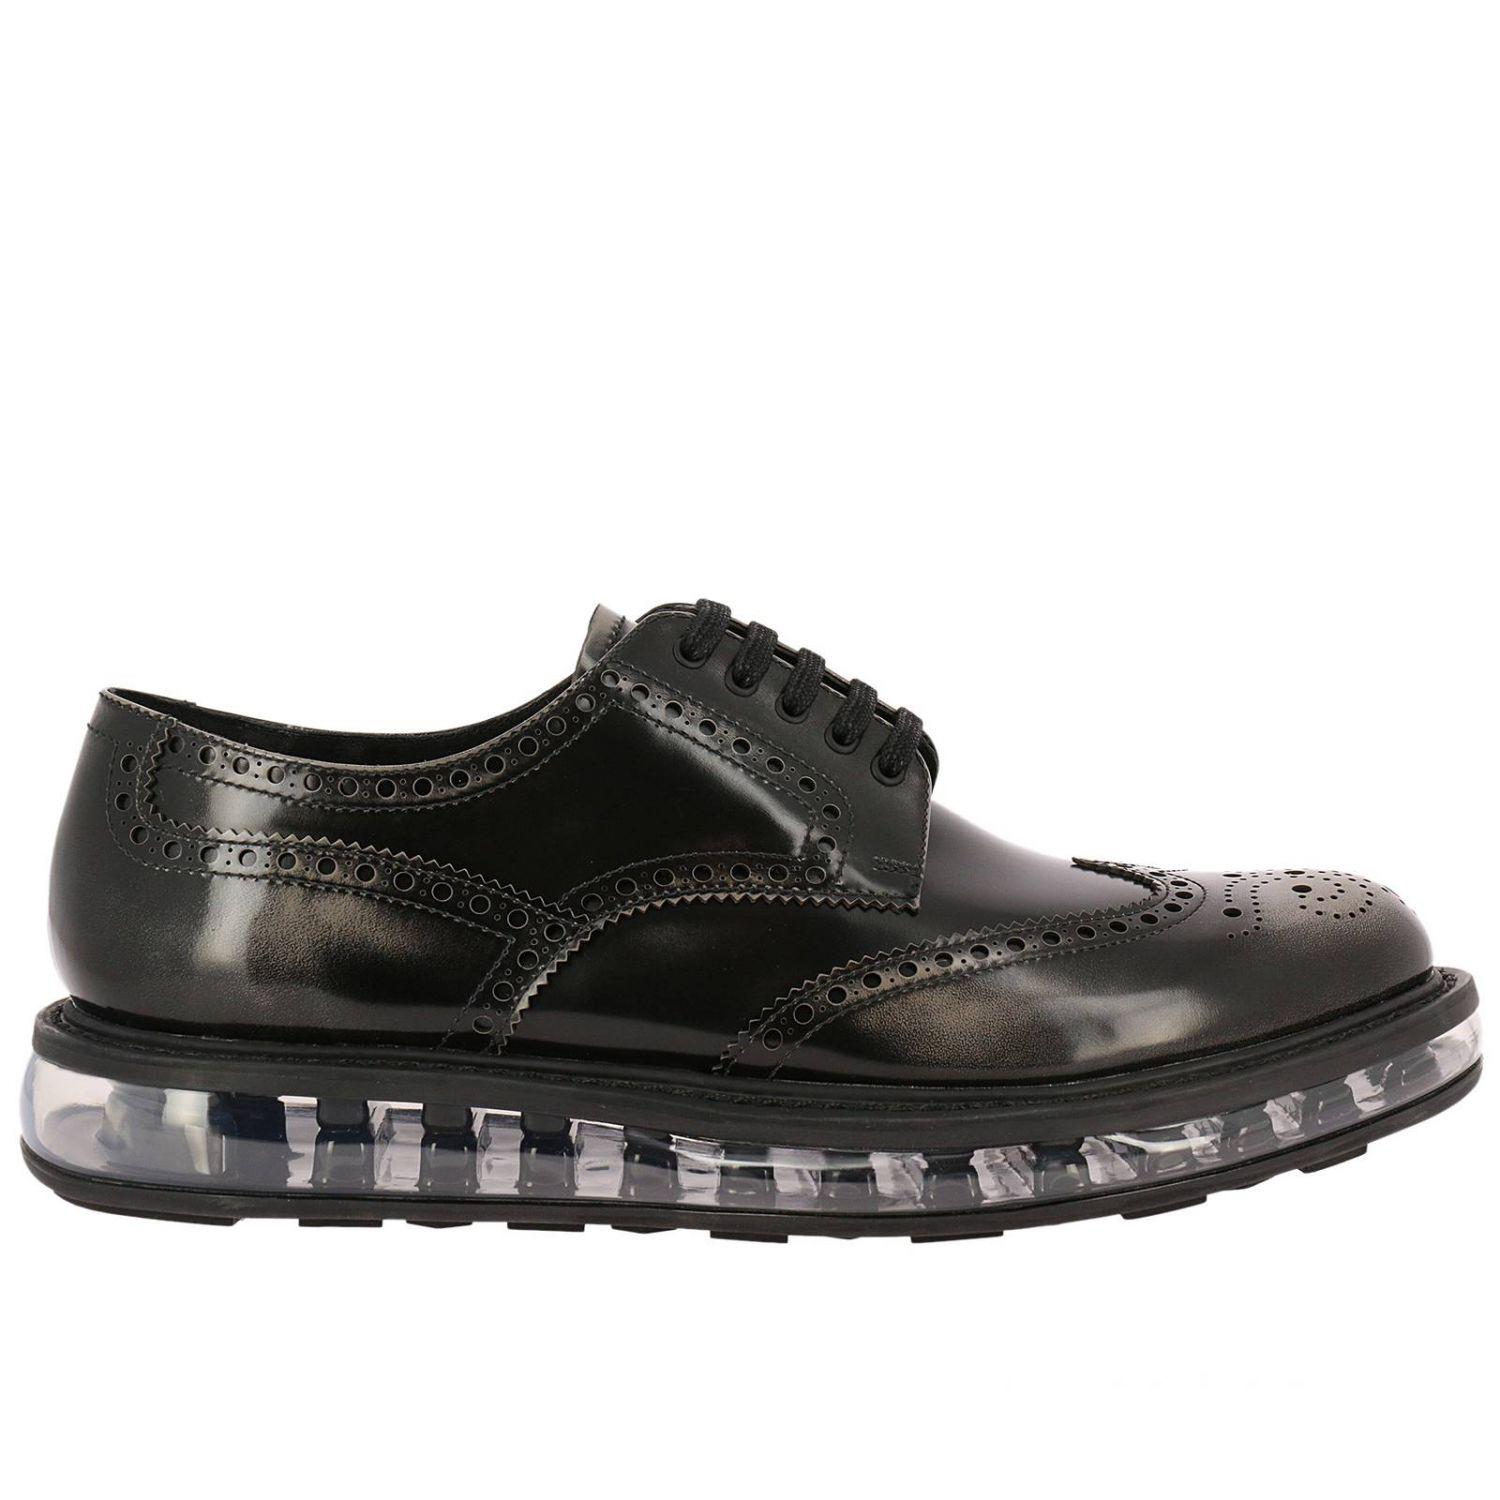 Lyst - Prada Brogue Shoes Shoes Men in Black for Men